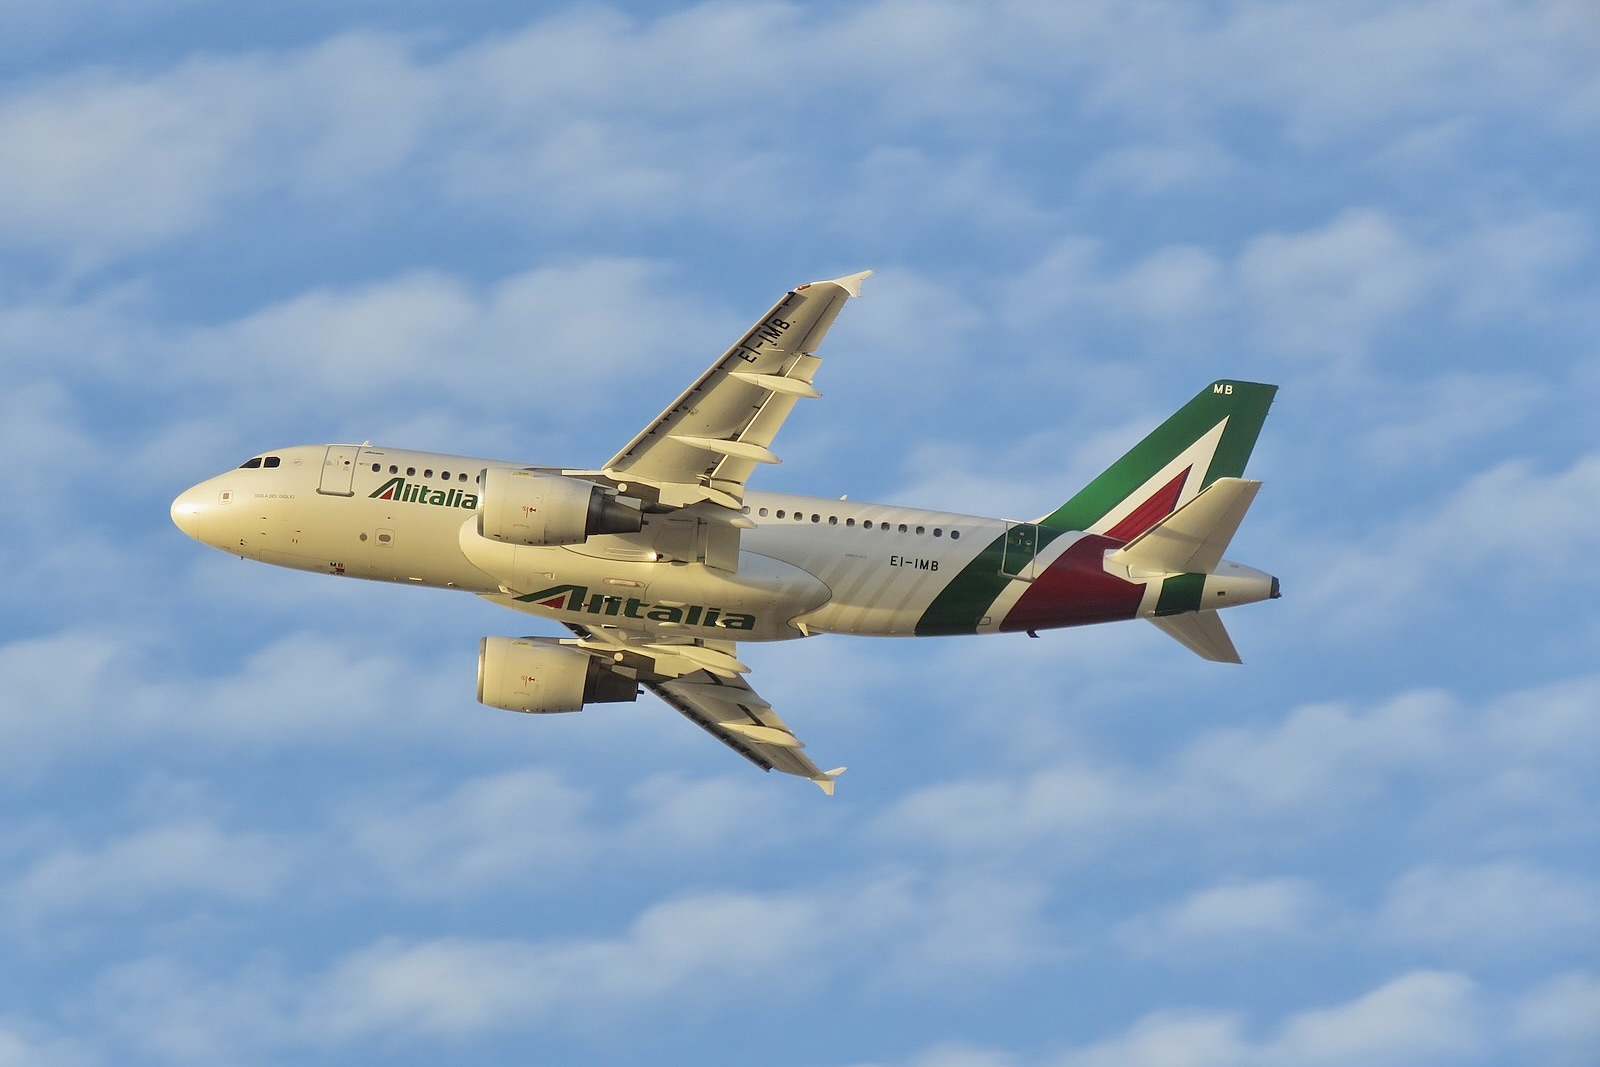 Saiba quantas aeronaves ainda voam nas cores da Alitalia